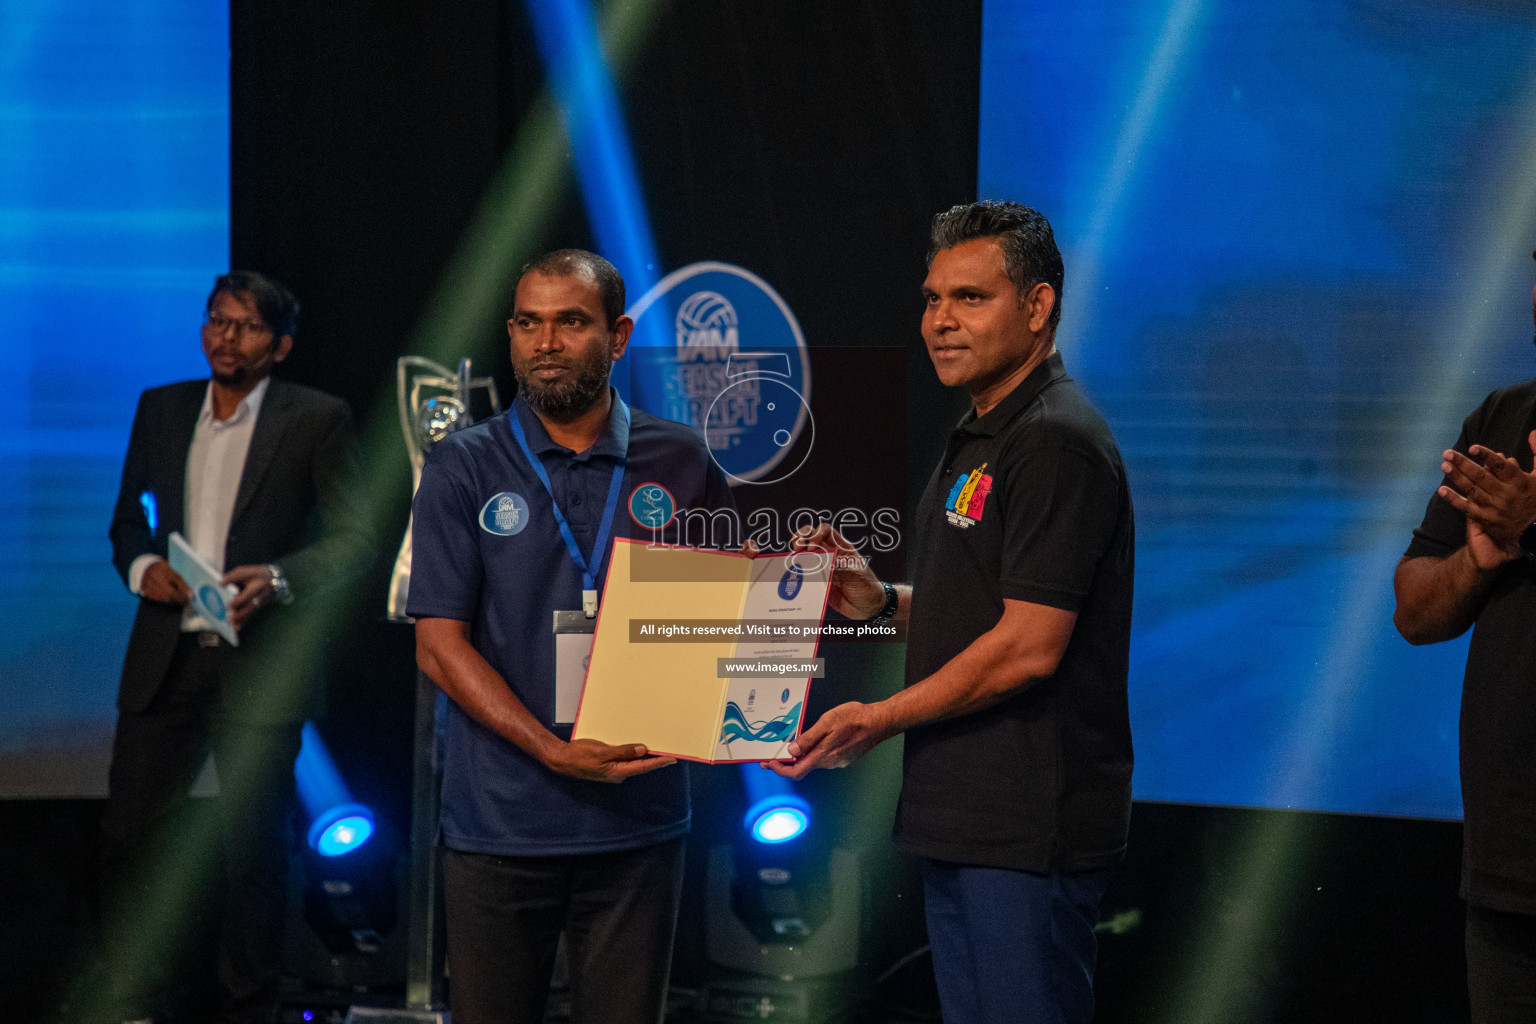 VAM Season Draft 2022 was held in Male', Maldives on Wednesday, 1st June 2022.  Photos: Ismail Thoriq / images.mv